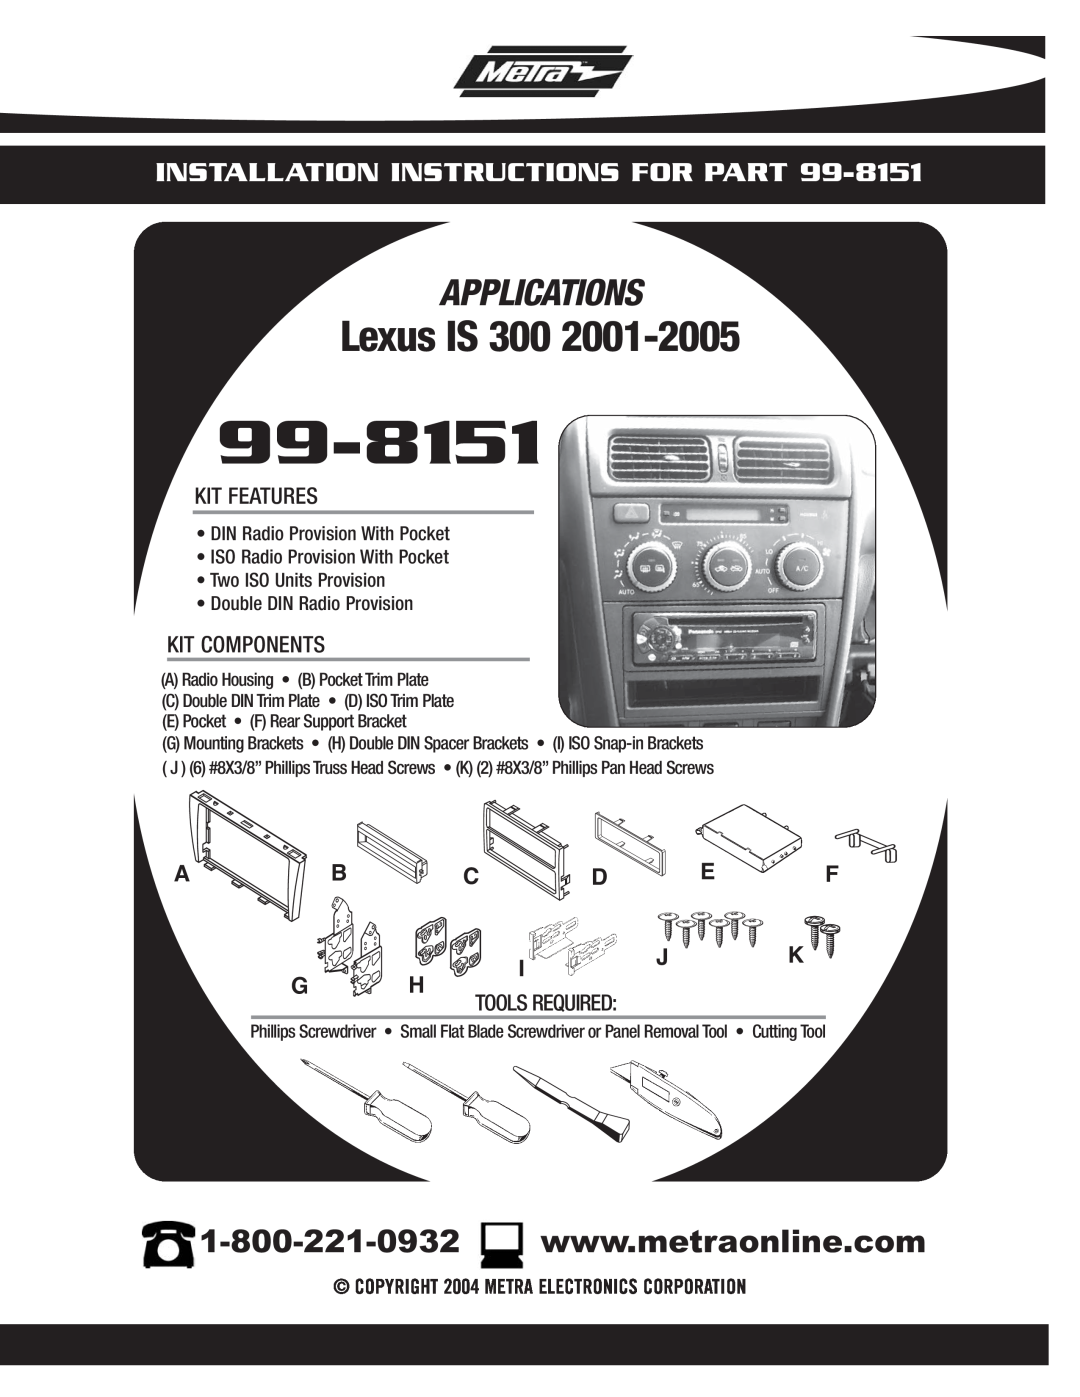 Metra Electronics 99-8151 installation instructions Lexus IS, Applications, Installation Instructions For Part 